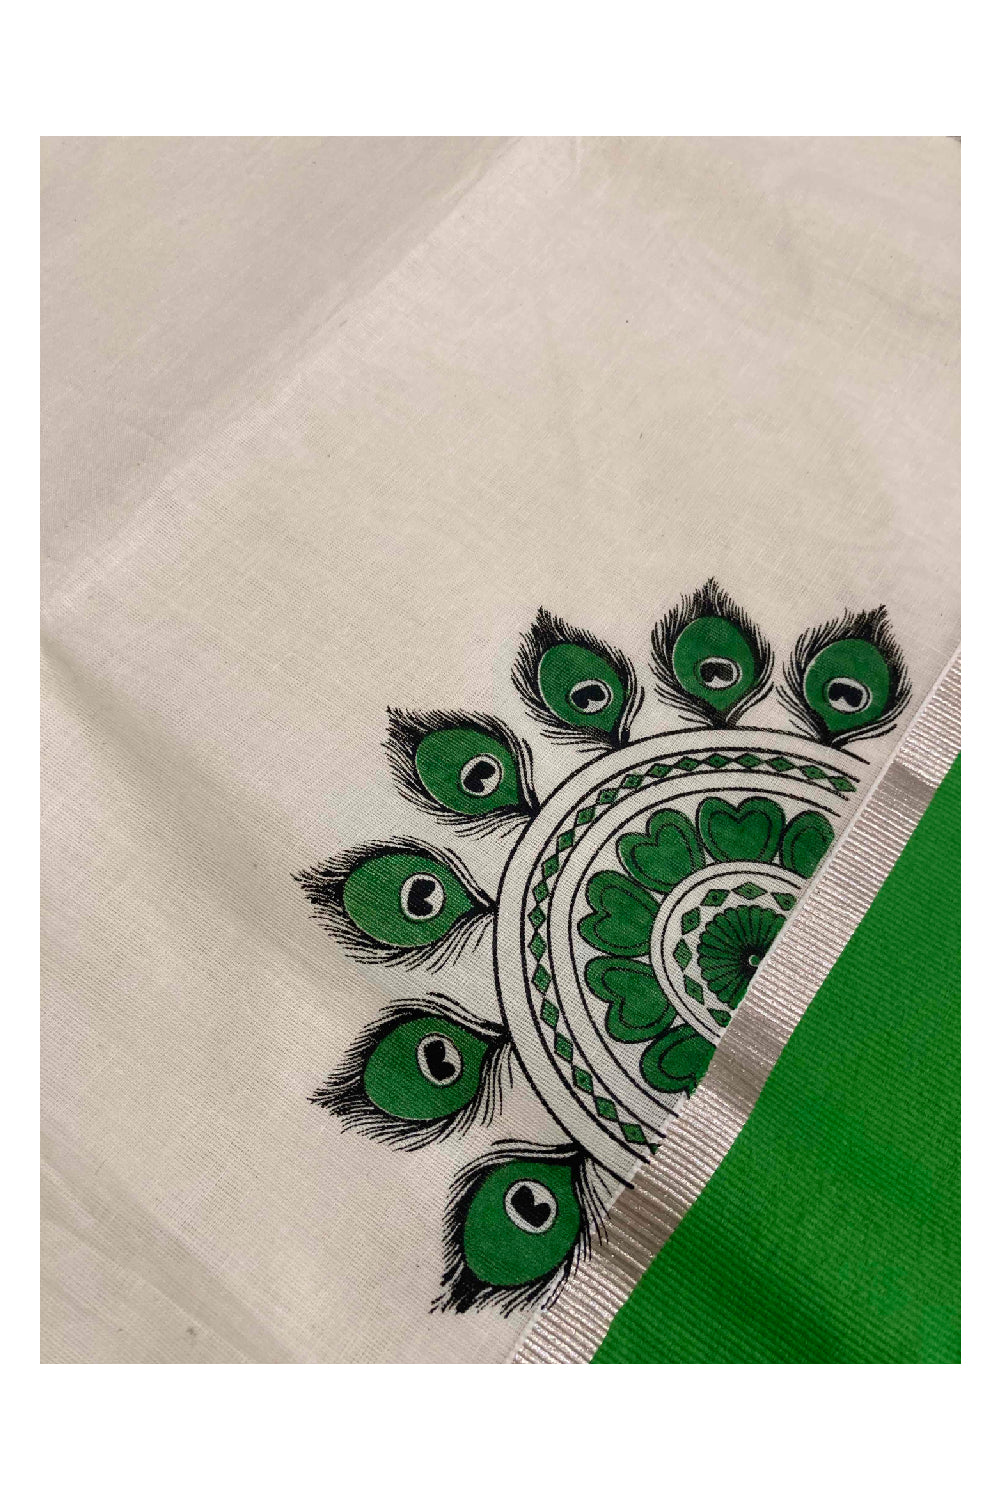 Kerala Pure Cotton Silver Kasavu Saree with Mural Printed Peacock Feather Semi Circle Green Border